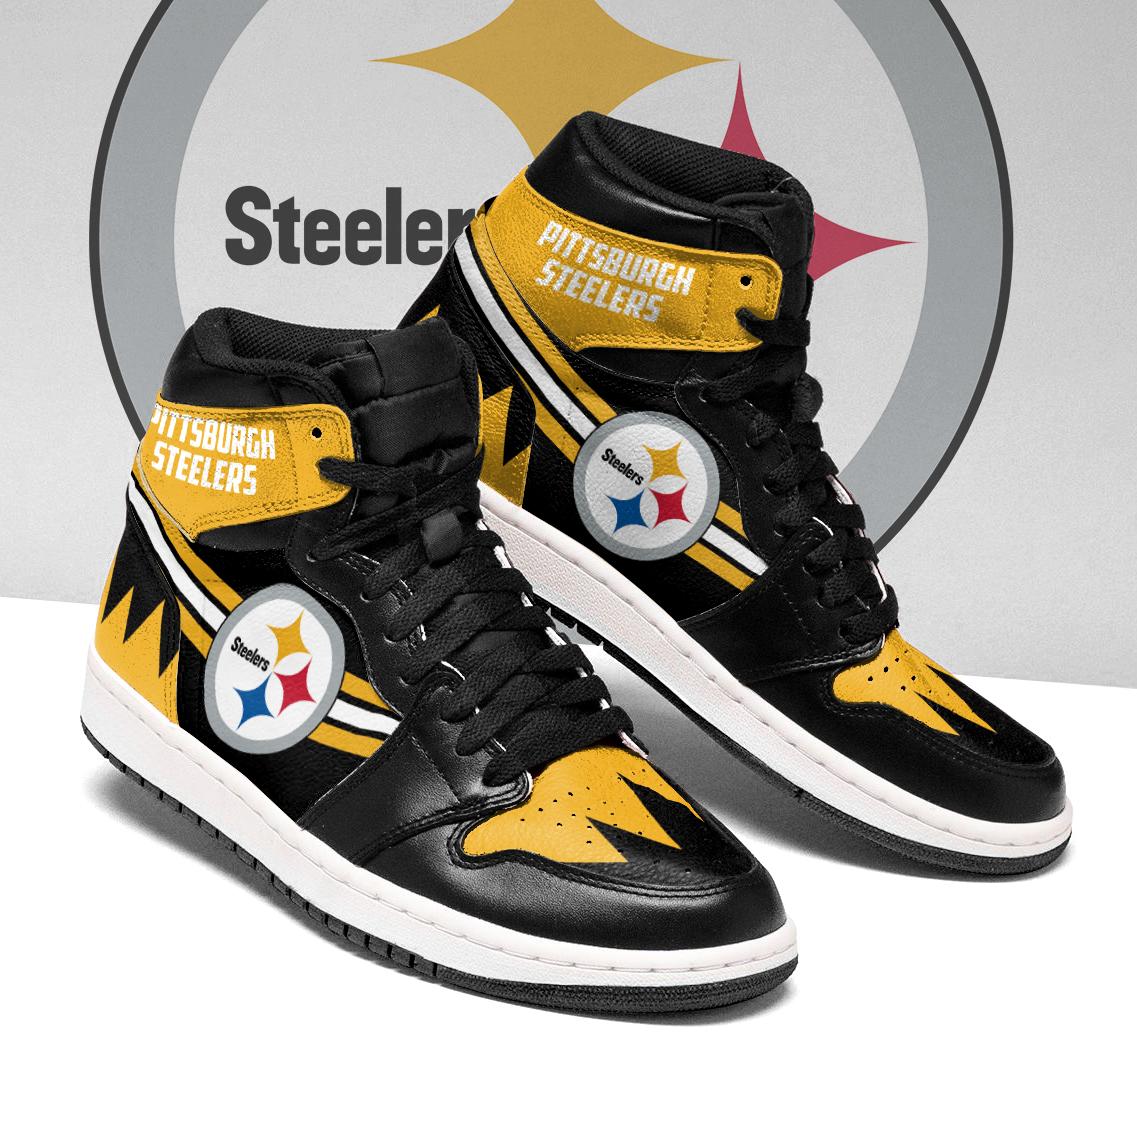 Pittsburgh Steeler Jordan High Shoes Extreme-honor